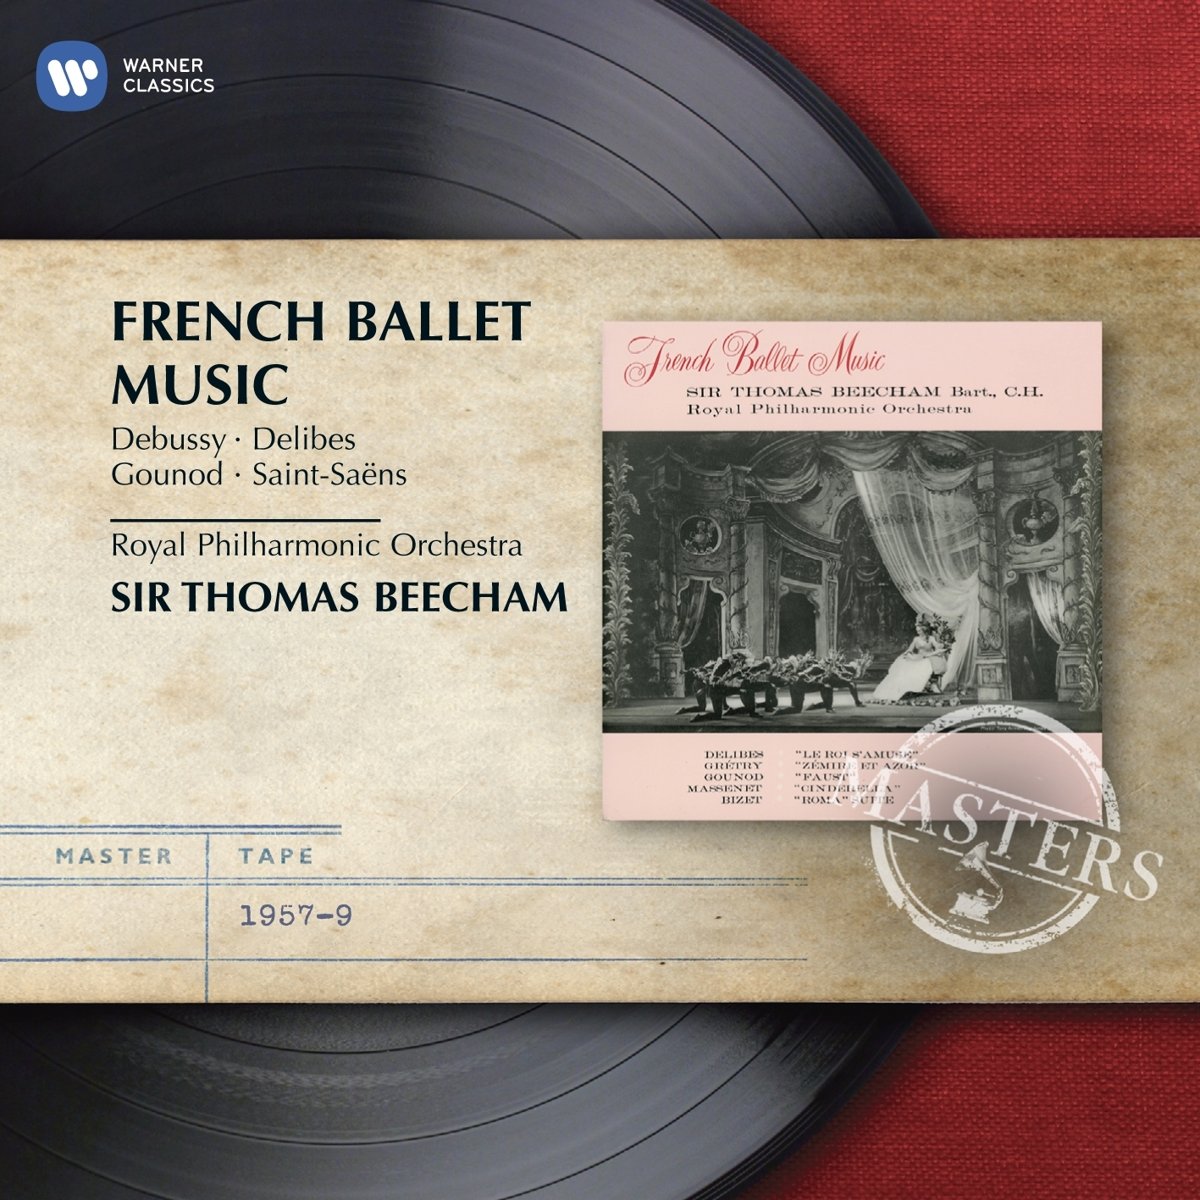 French Ballet Music - THOMAS BEECHAM, Royal Philharmonic Orchestra